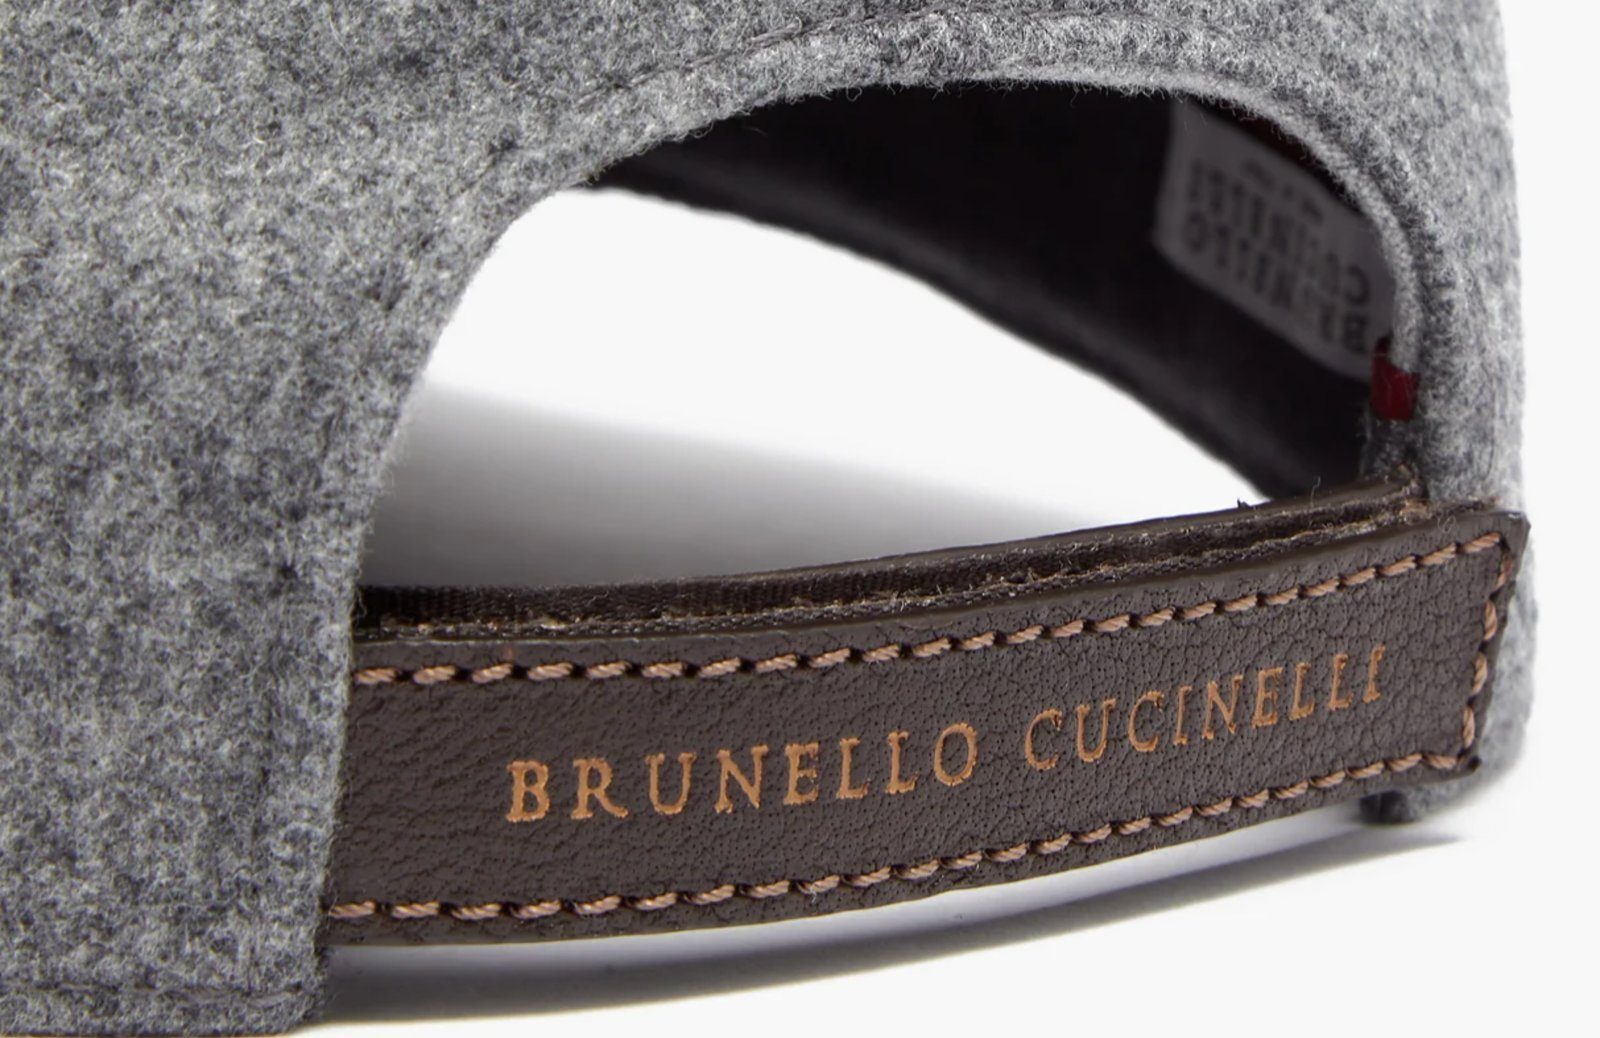 BRUNELLO BrunelloCucinelli-Wool-Cap-Grey-S Cap CUCINELLI Baseball